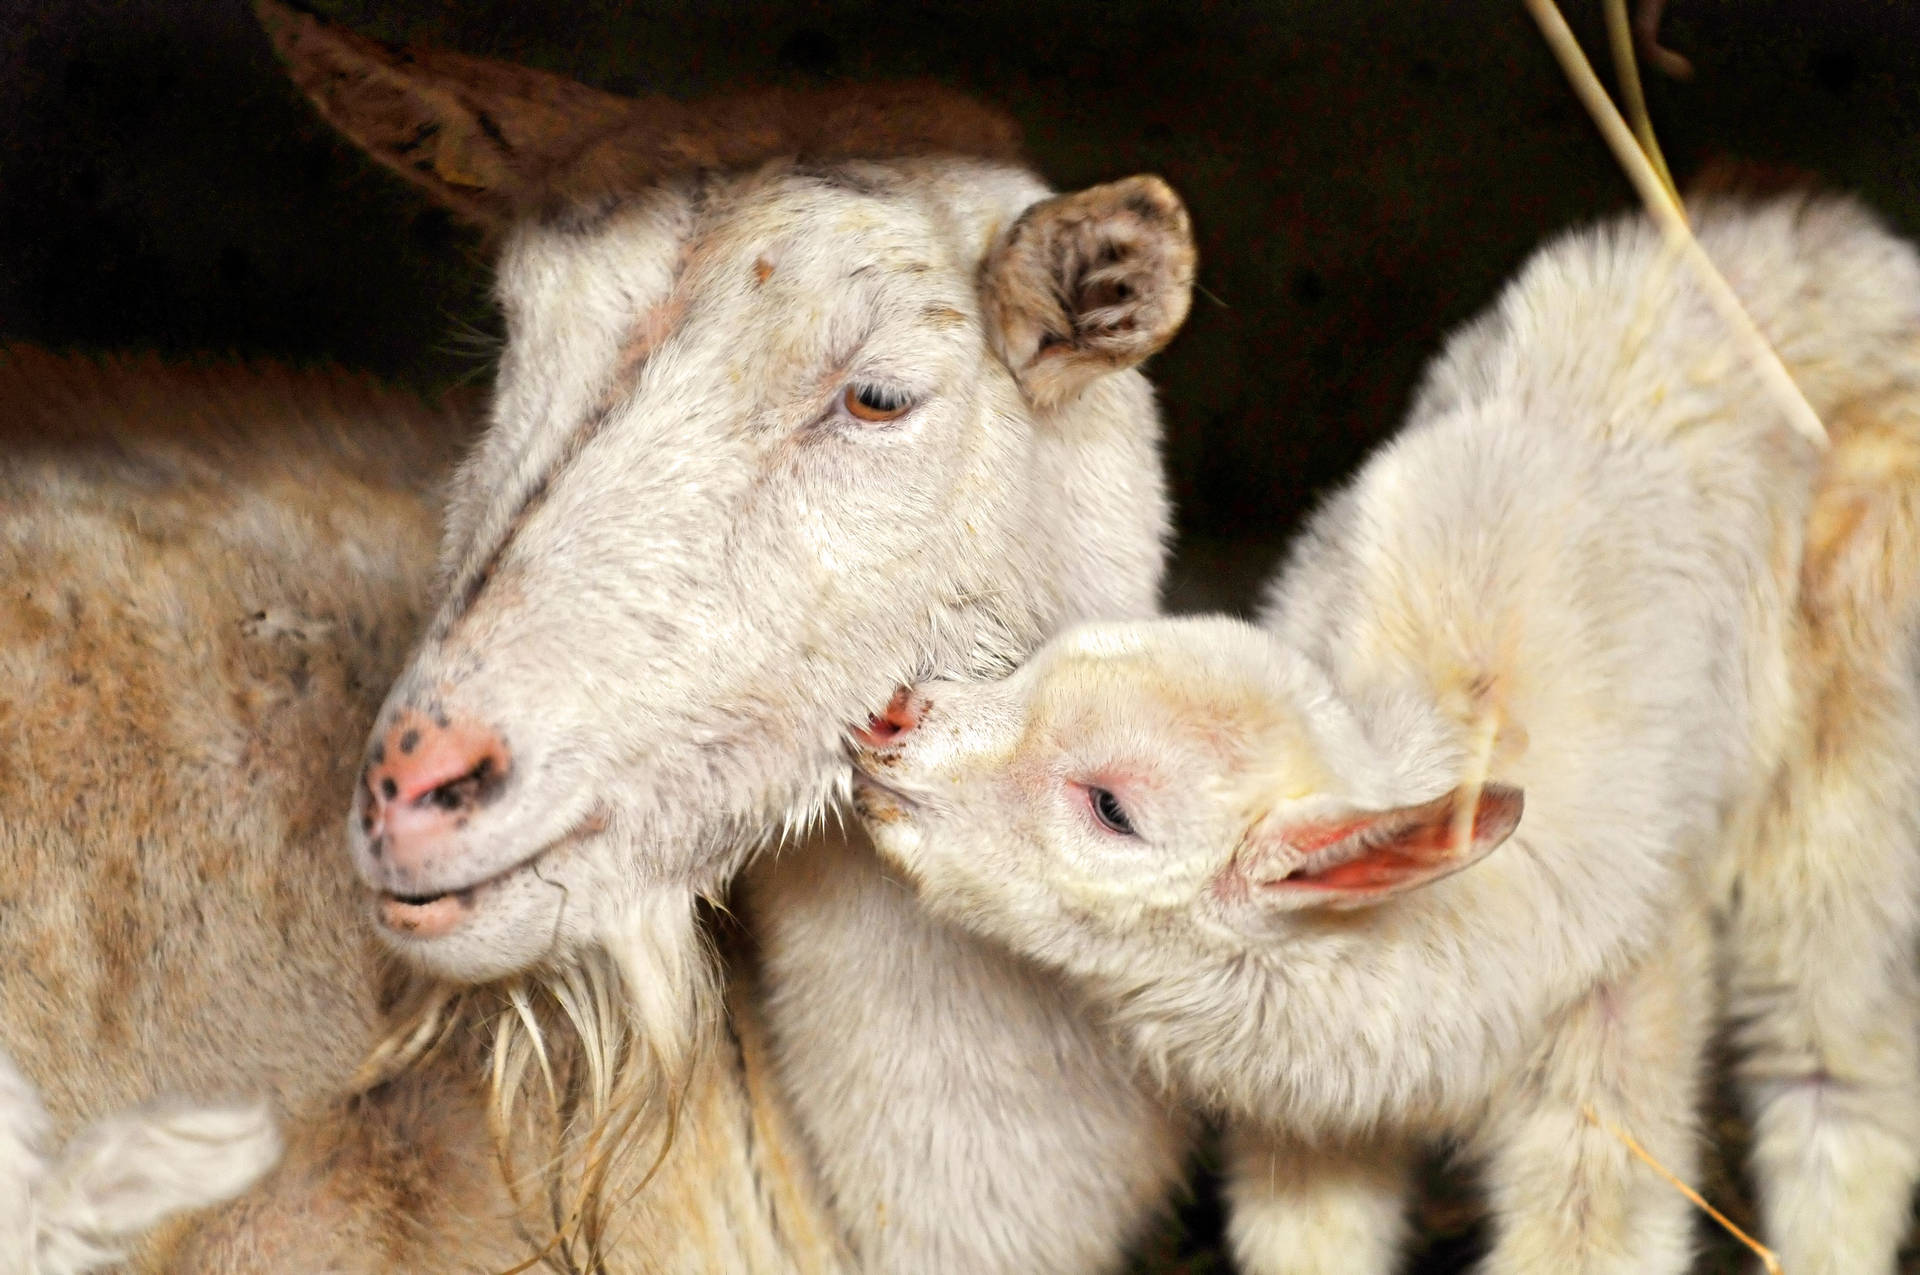 Lamb Sniffing Adult Sheep Wallpaper